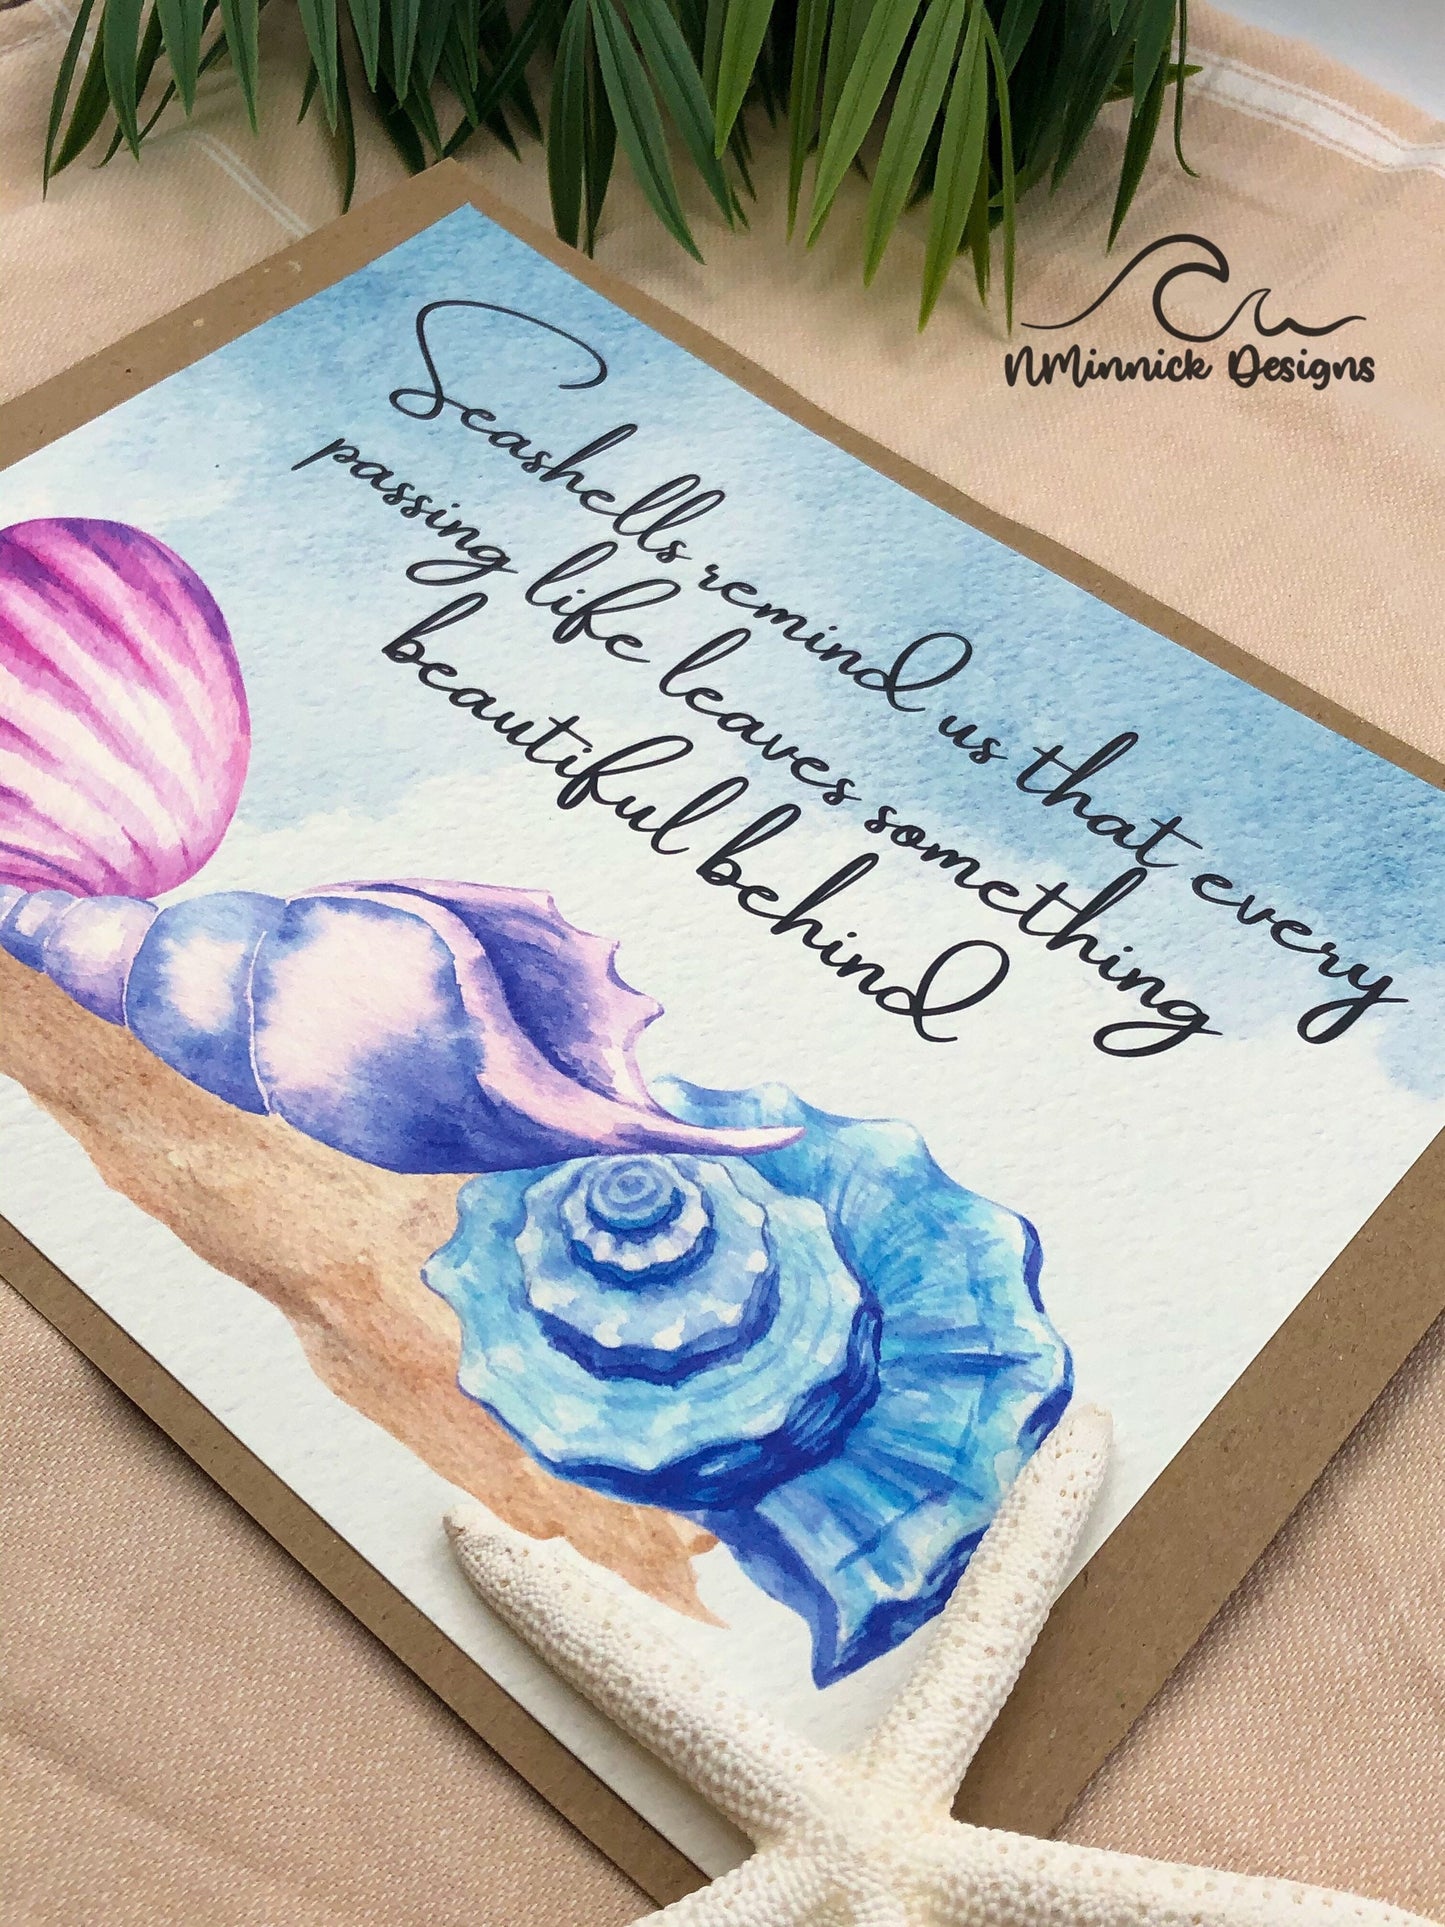 Seashells Remind Us Poem Print, In Memory Of, Seashell Wall Art Print, Sympathy Gift, Beach Wedding, Memorial Sign